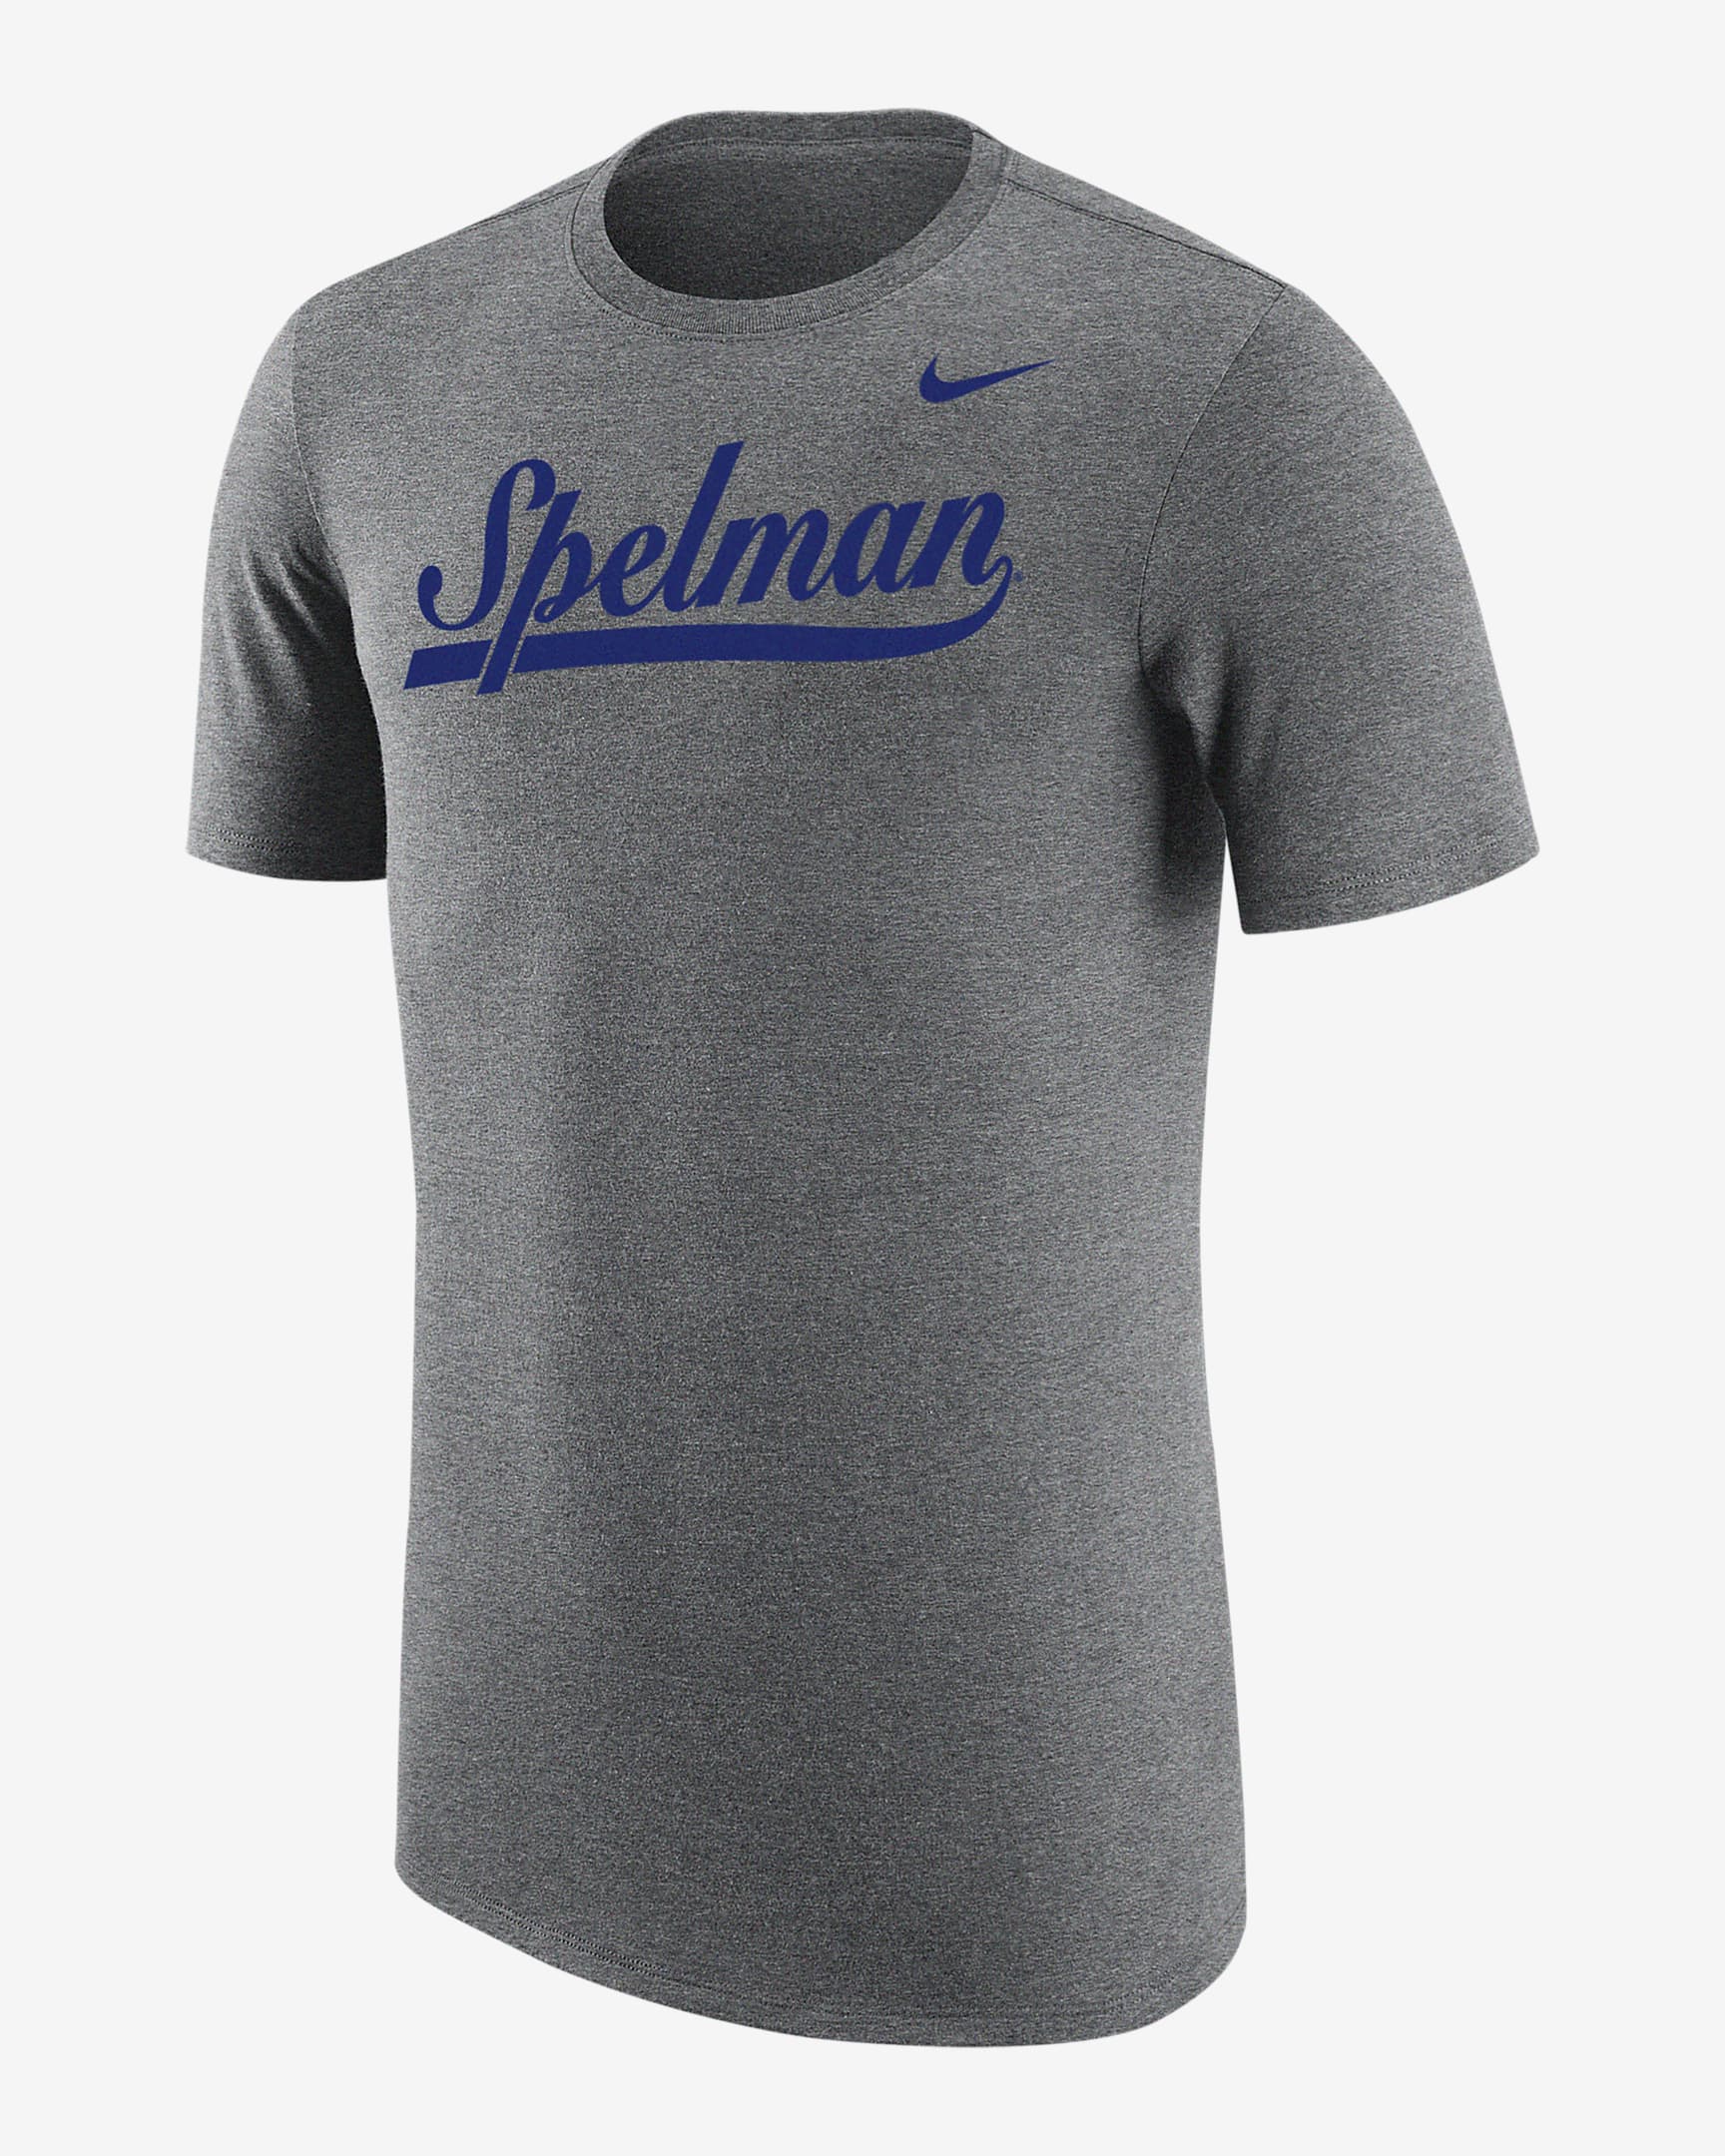 Spelman Men's Nike College T-Shirt. Nike.com